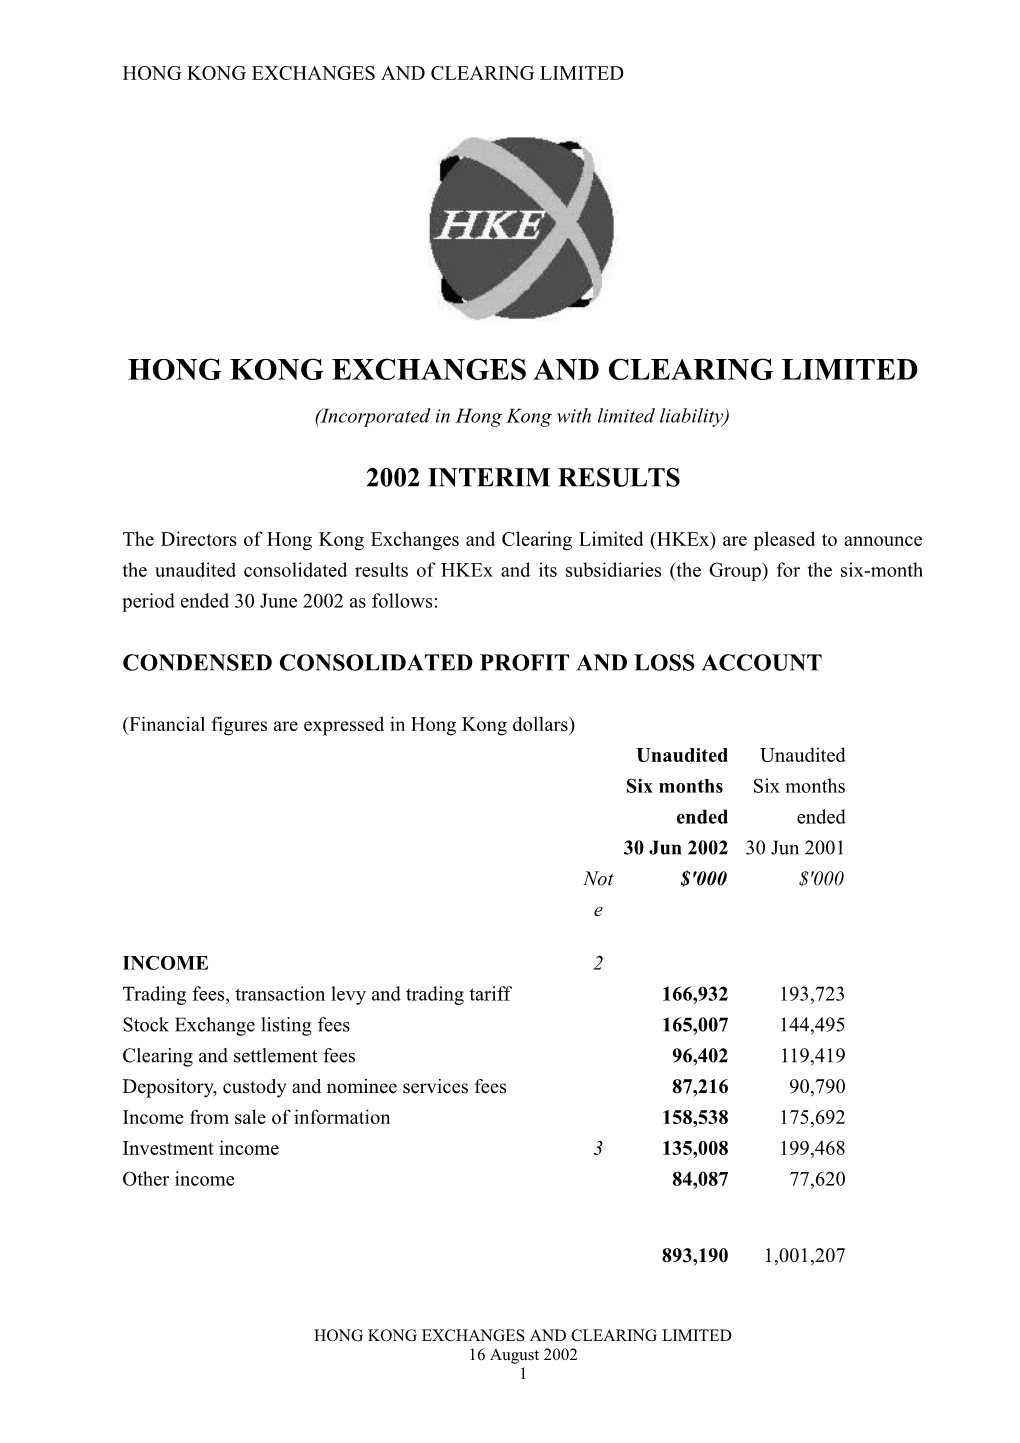 HKEX 00388 - Results Announcement